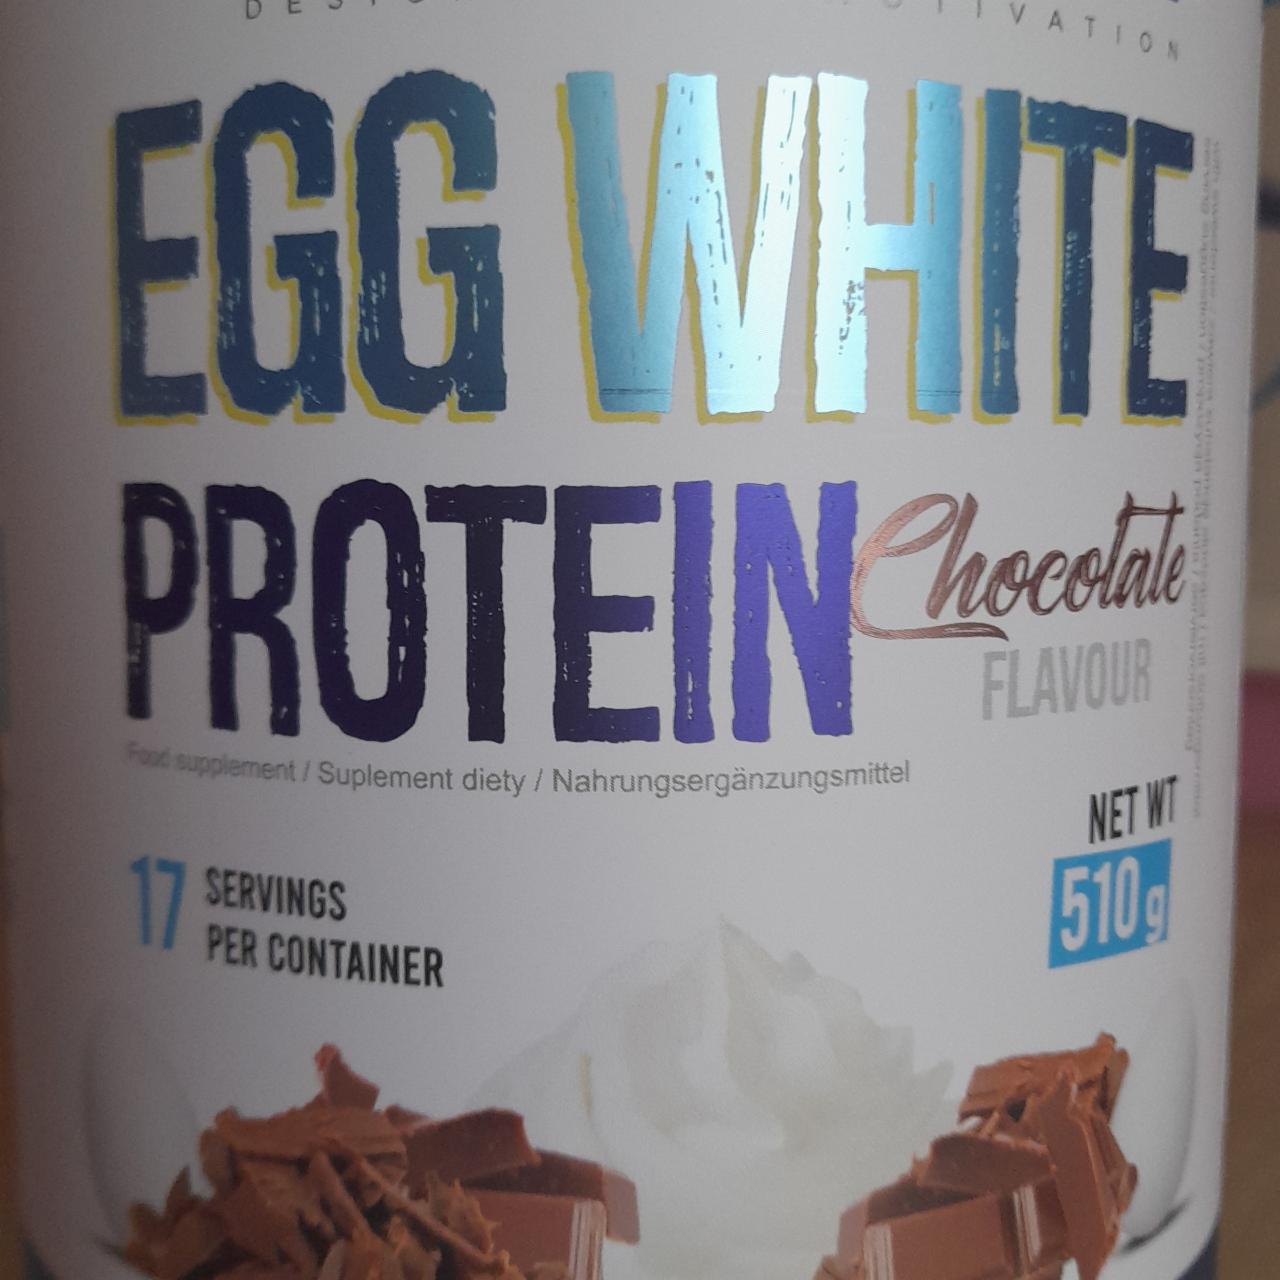 Fotografie - Egg white protein Chocolate flavour Allnutrition